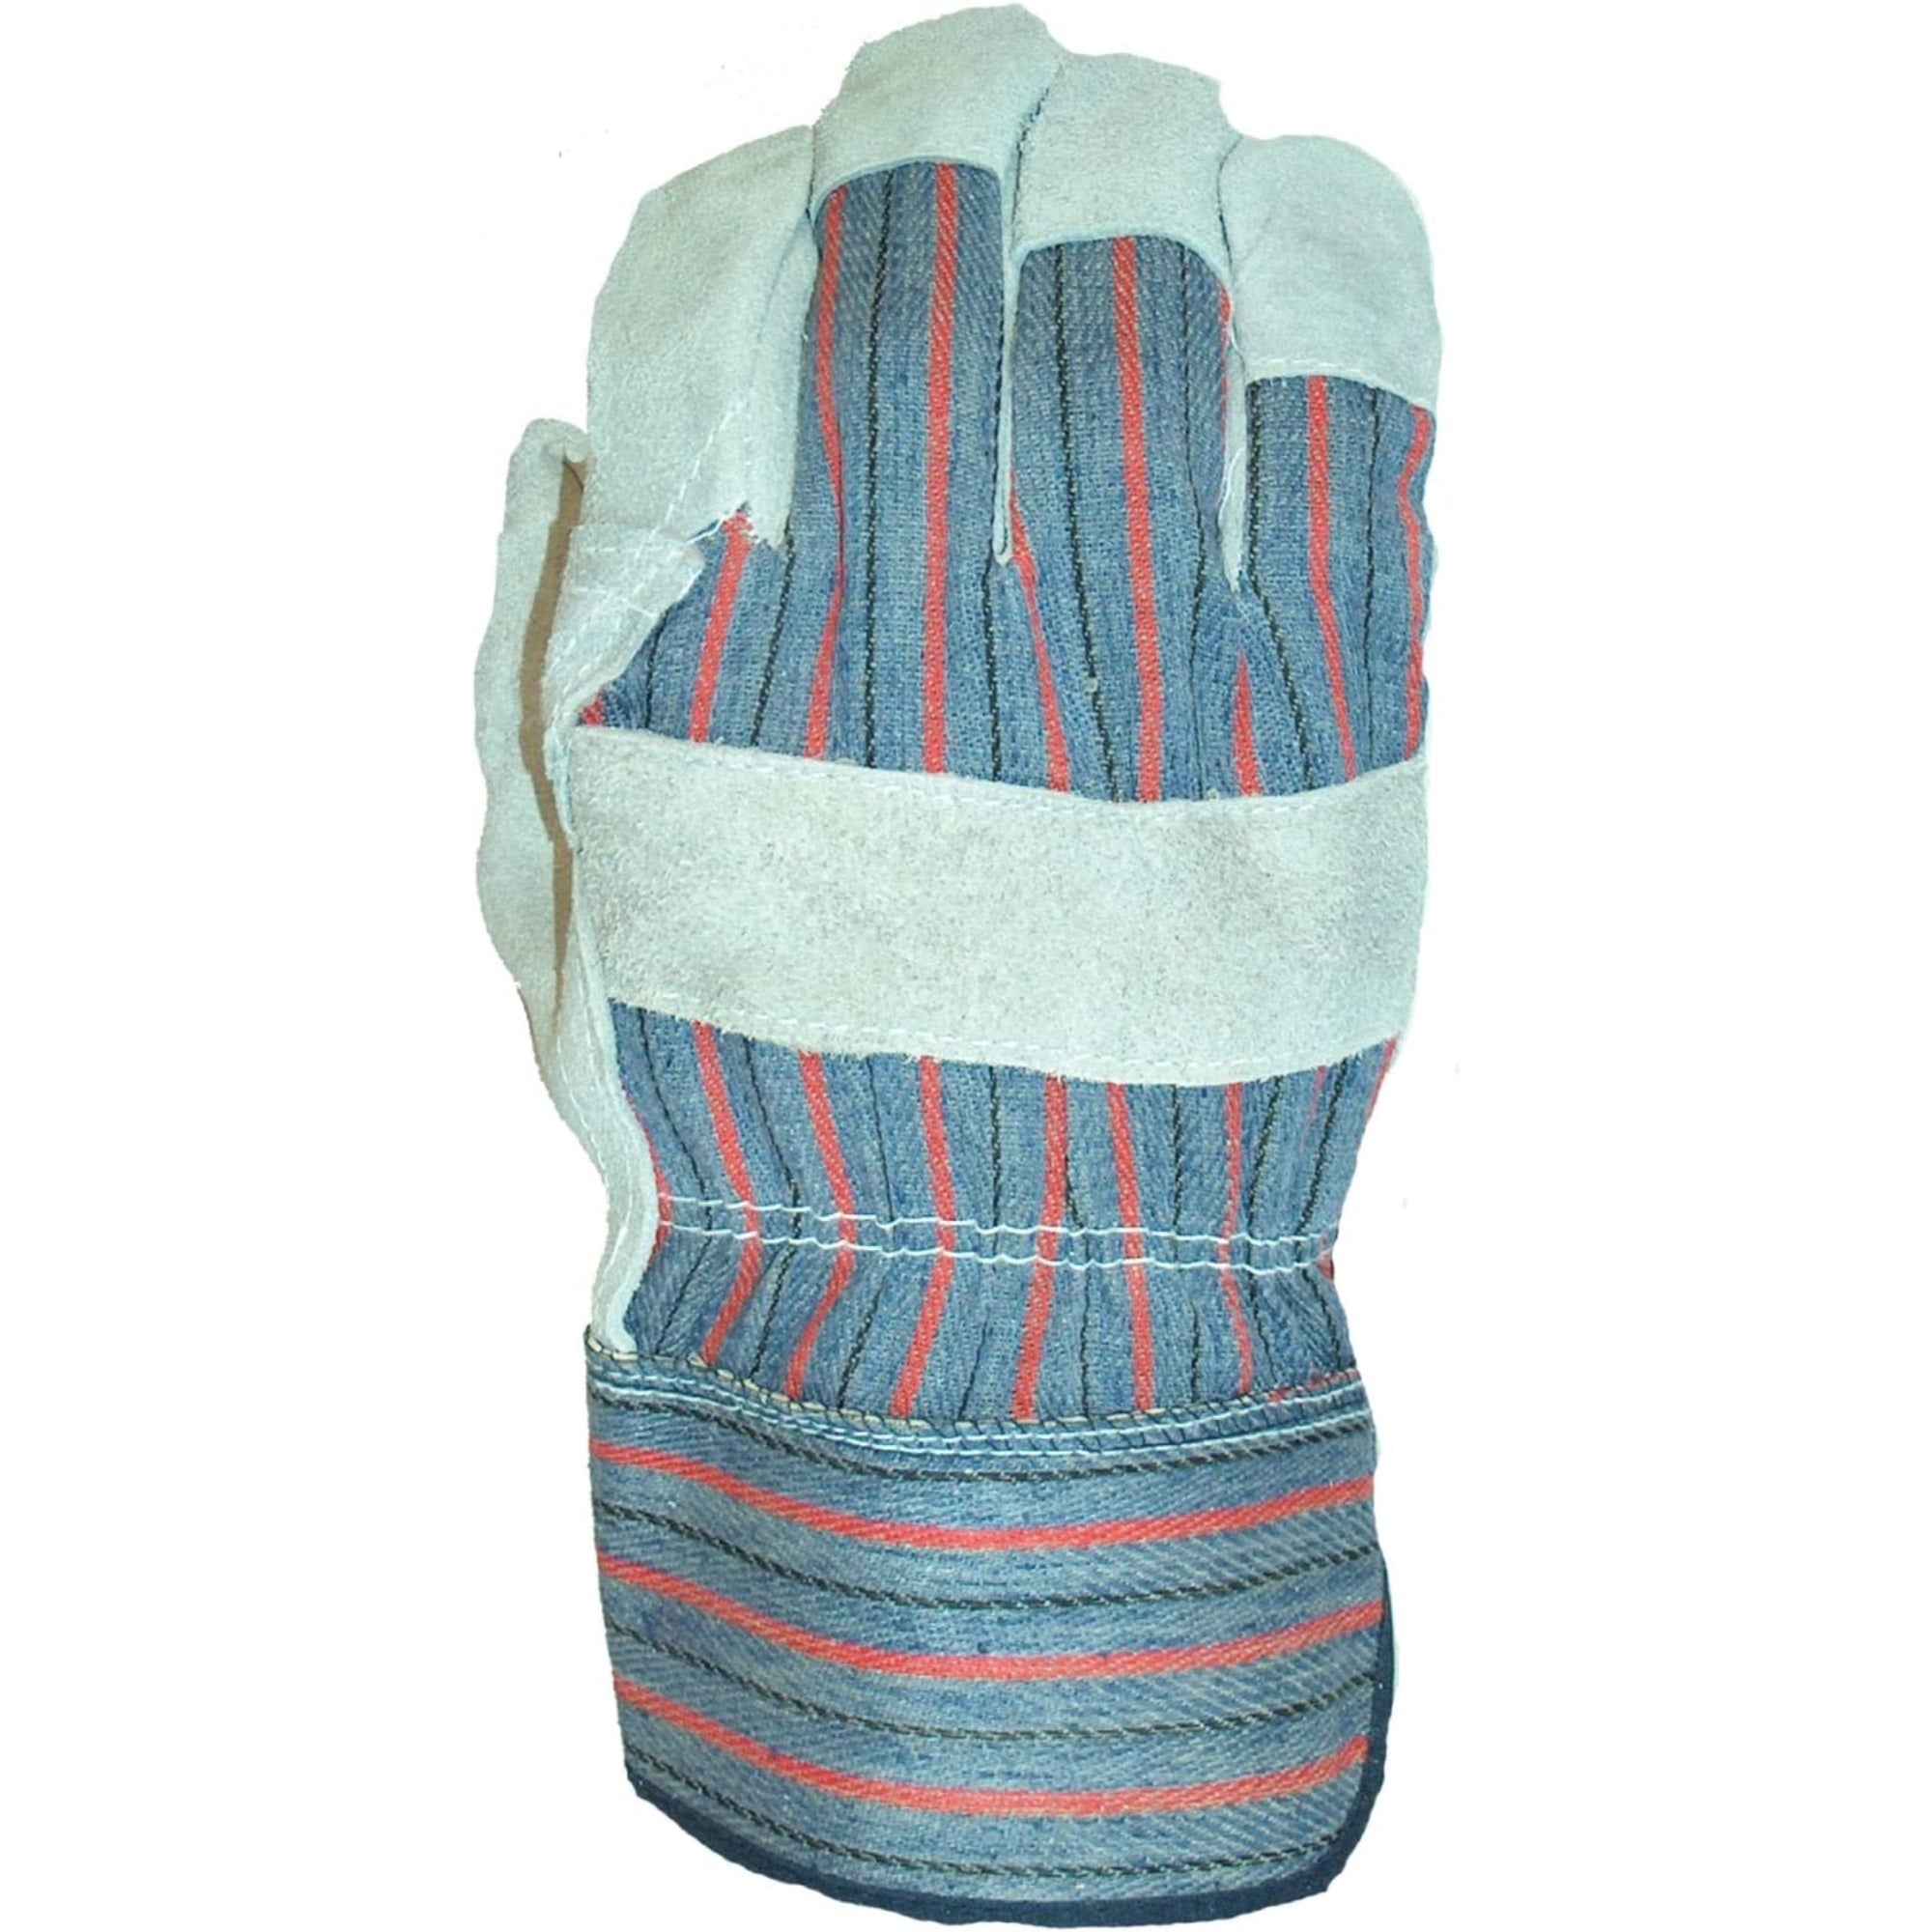 True Grip Men's Leather Palm Safety Cuff Glove, Large (1 Pair)